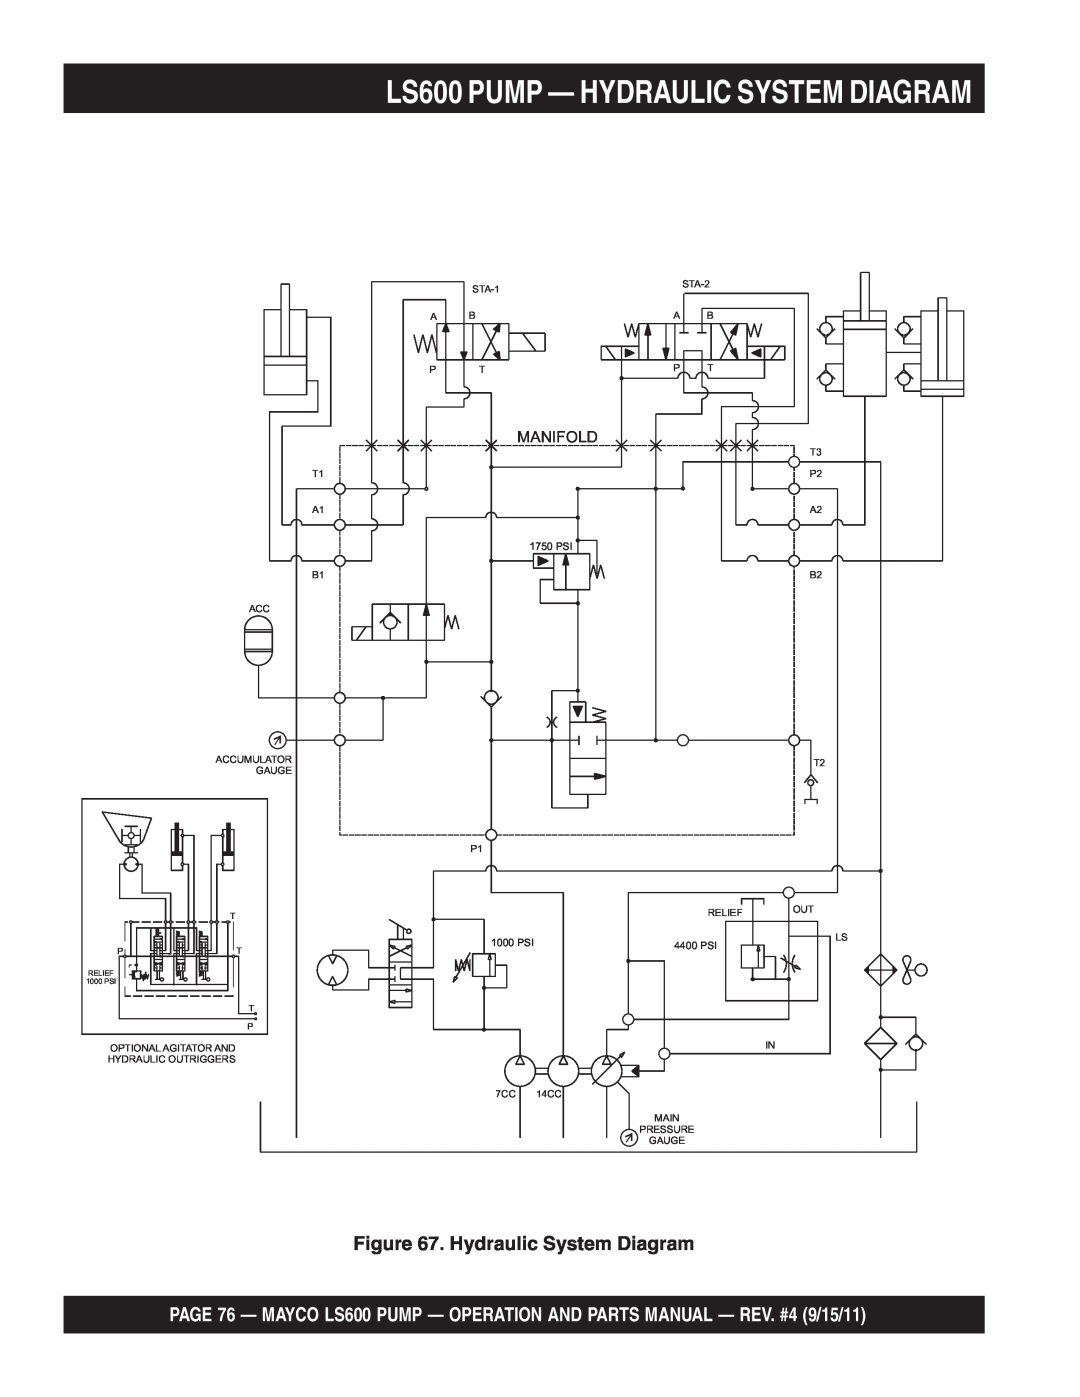 Multiquip manual LS600 PUMP — HYDRAULIC SYSTEM DIAGRAM, Hydraulic System Diagram, Manifold 